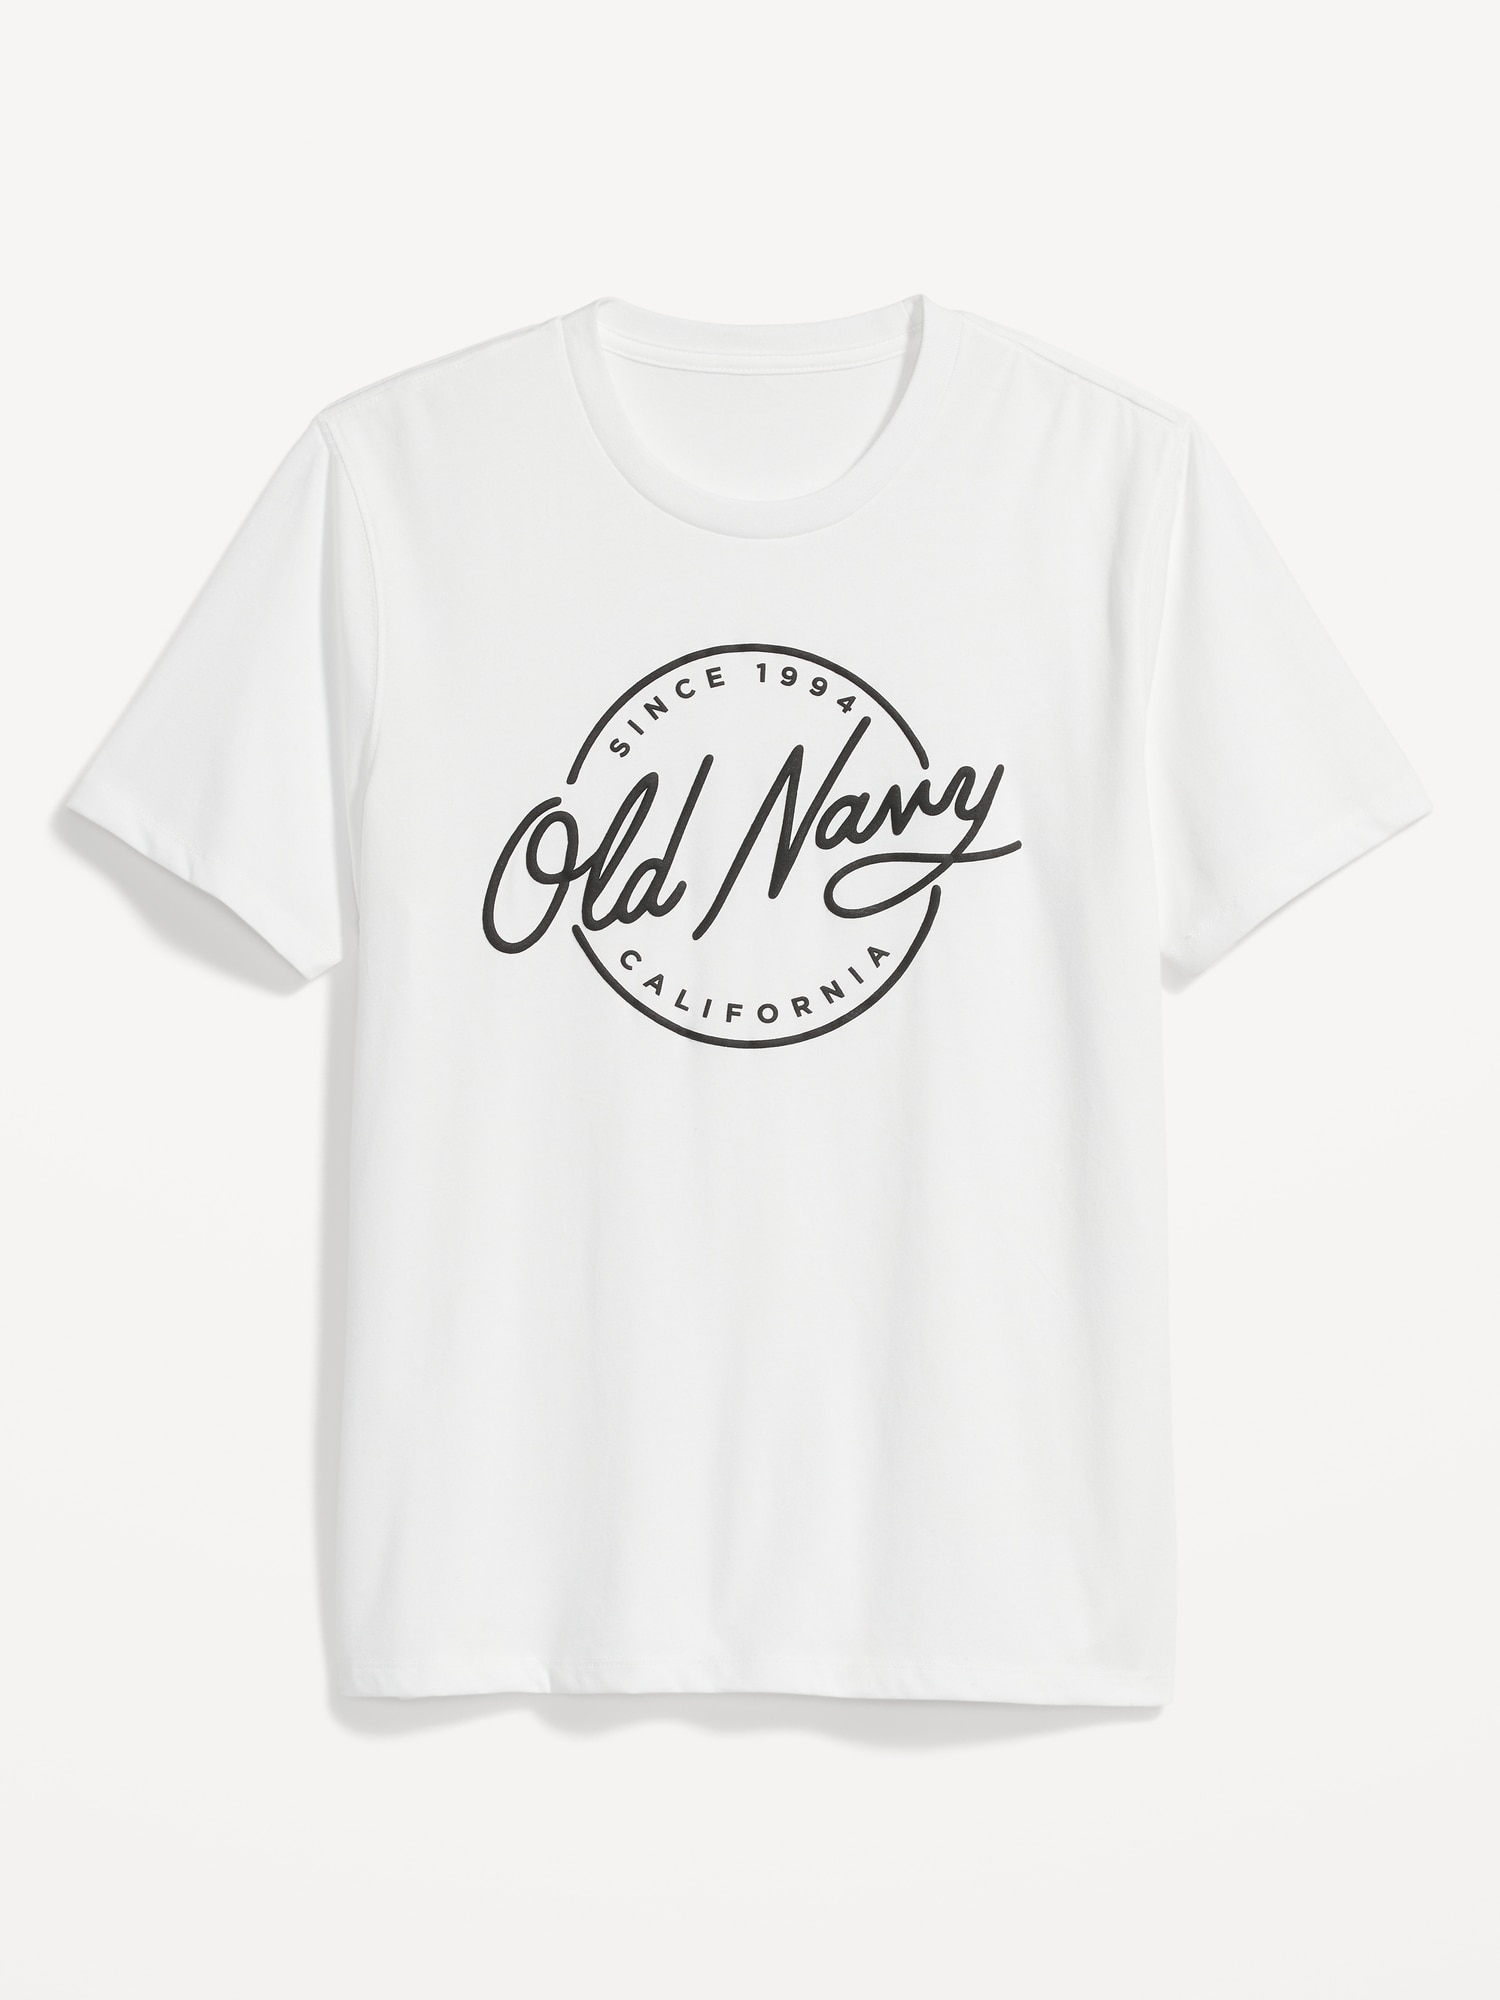 Old Navy Logo Graphic T-Shirt for Men white. 1